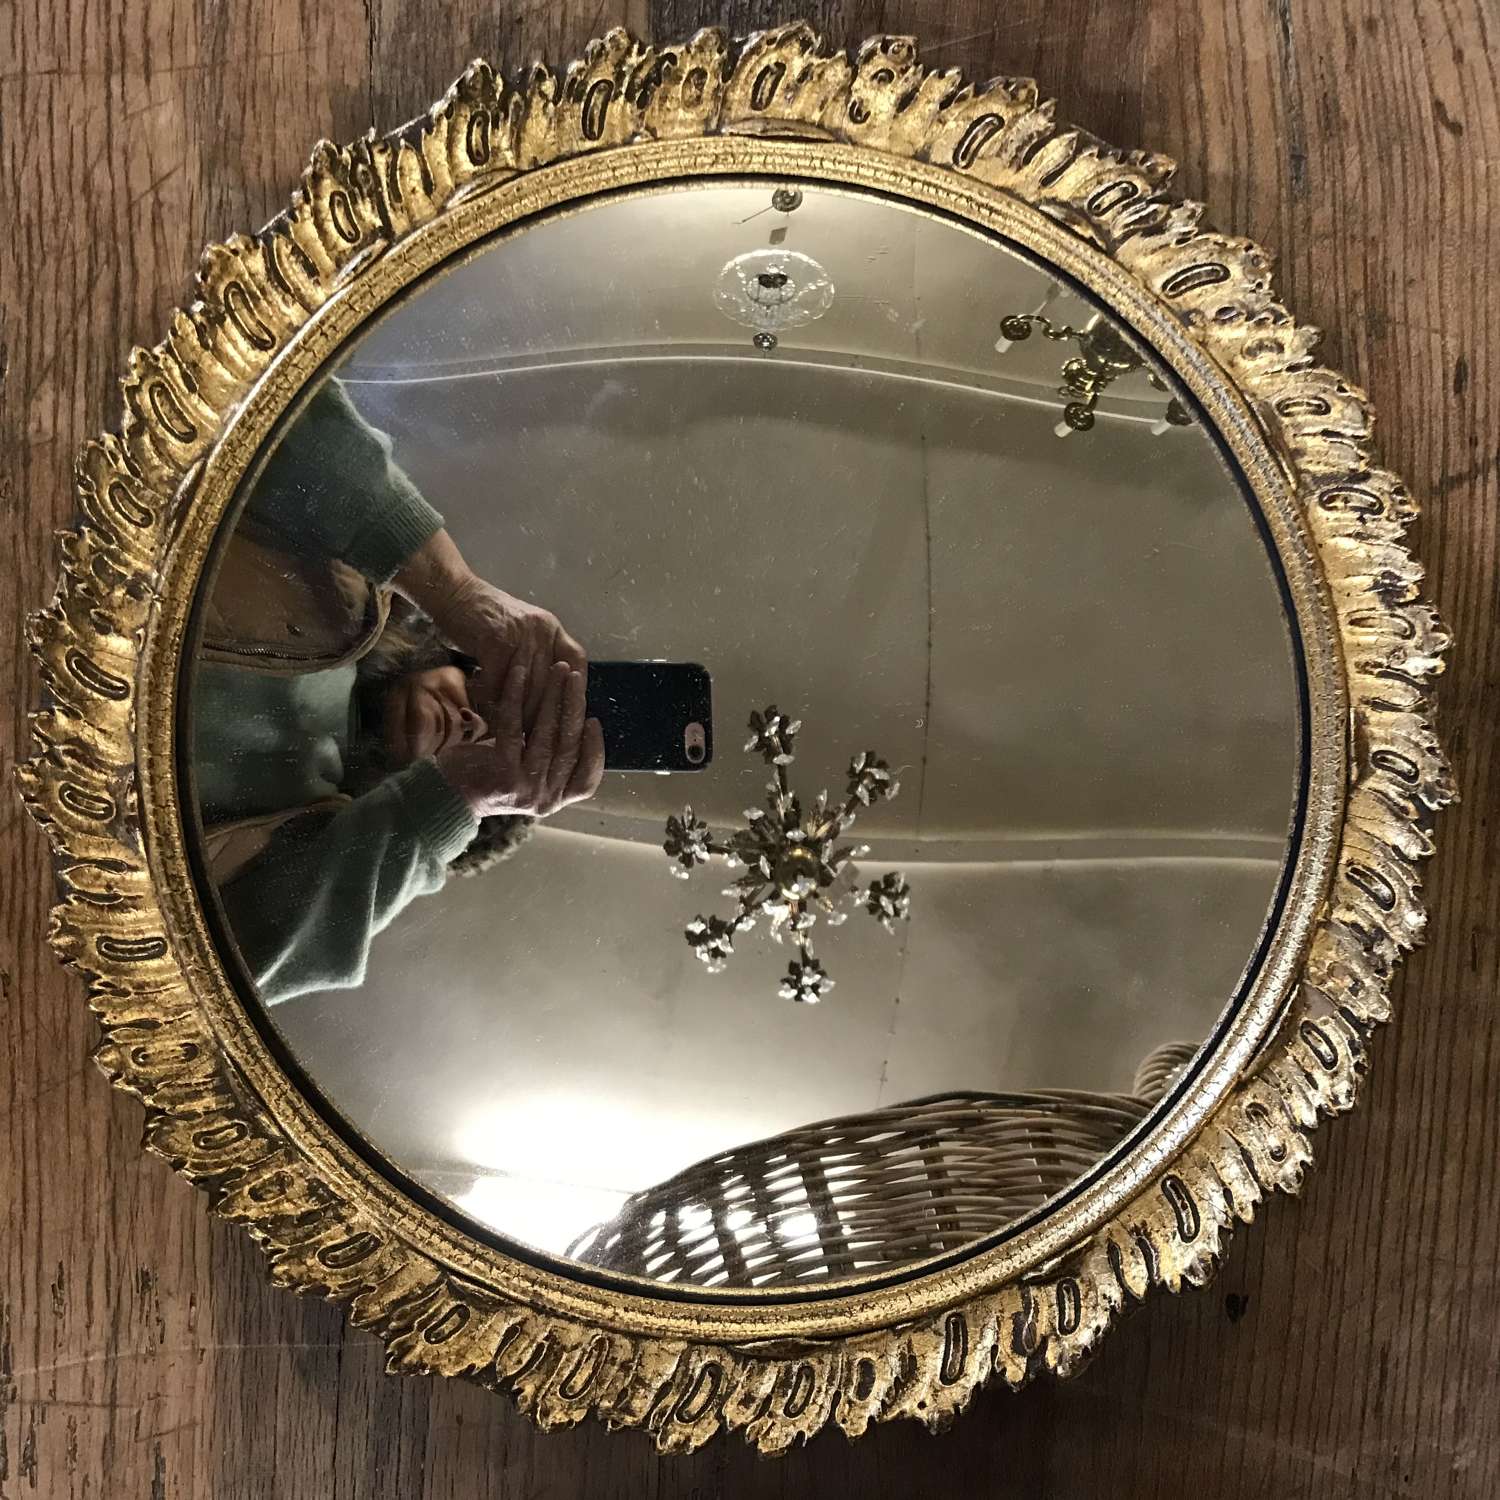 Vintage convex mirror in decorative gilt frame